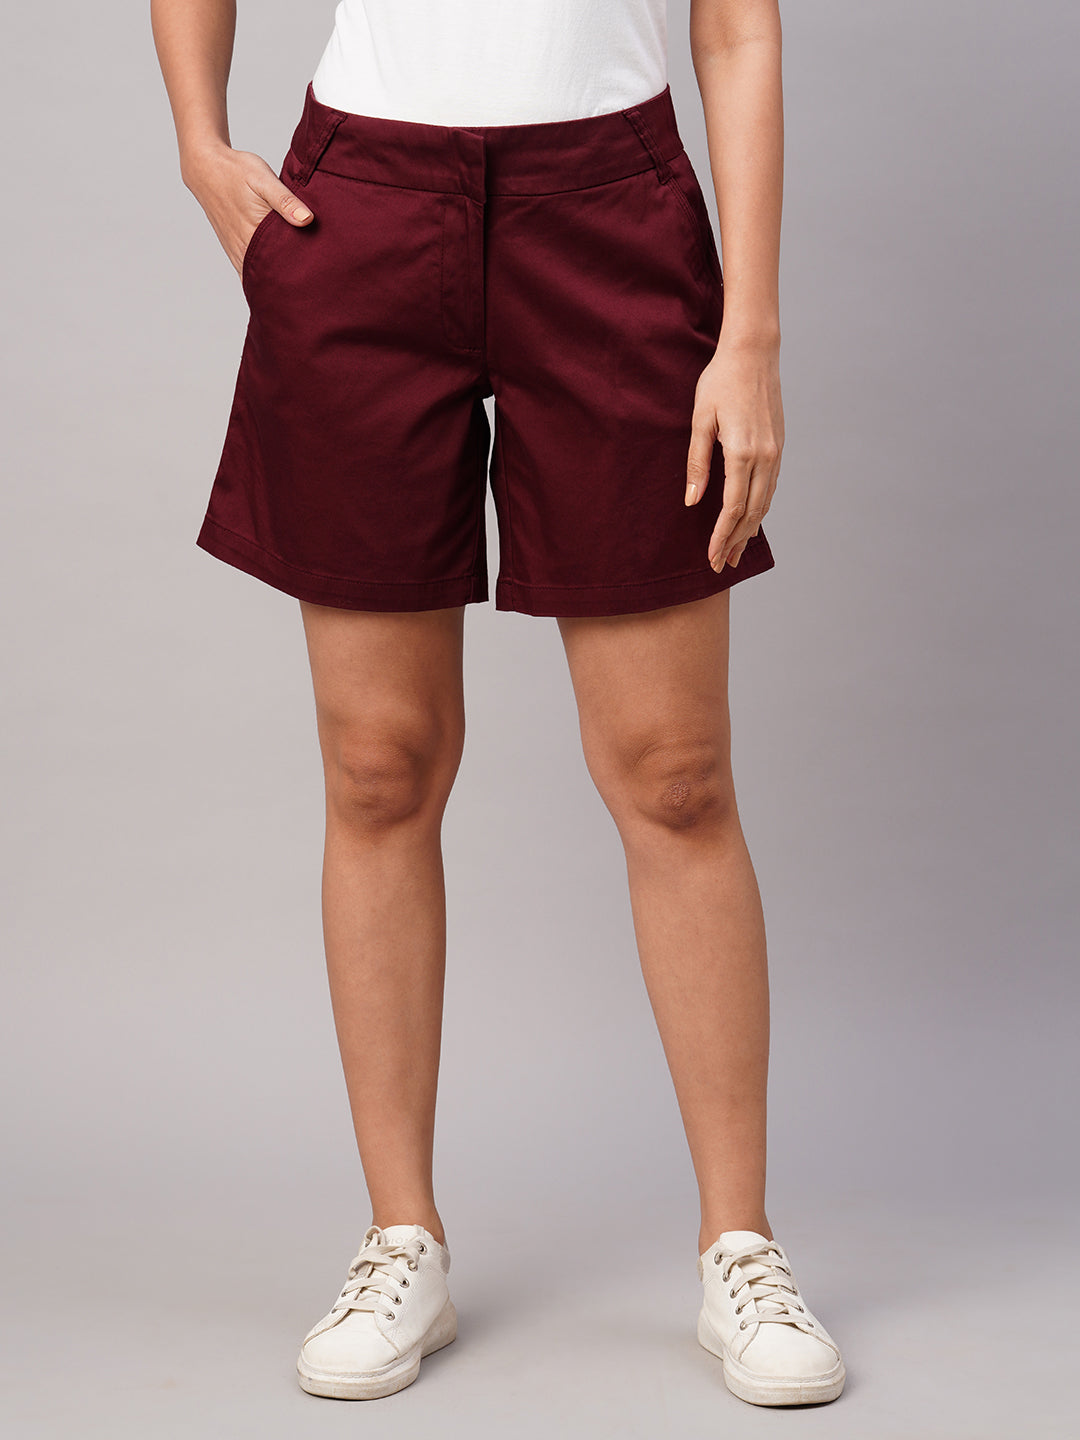 Women's Maroon/Red Cotton Lycra Regular Fit Shorts